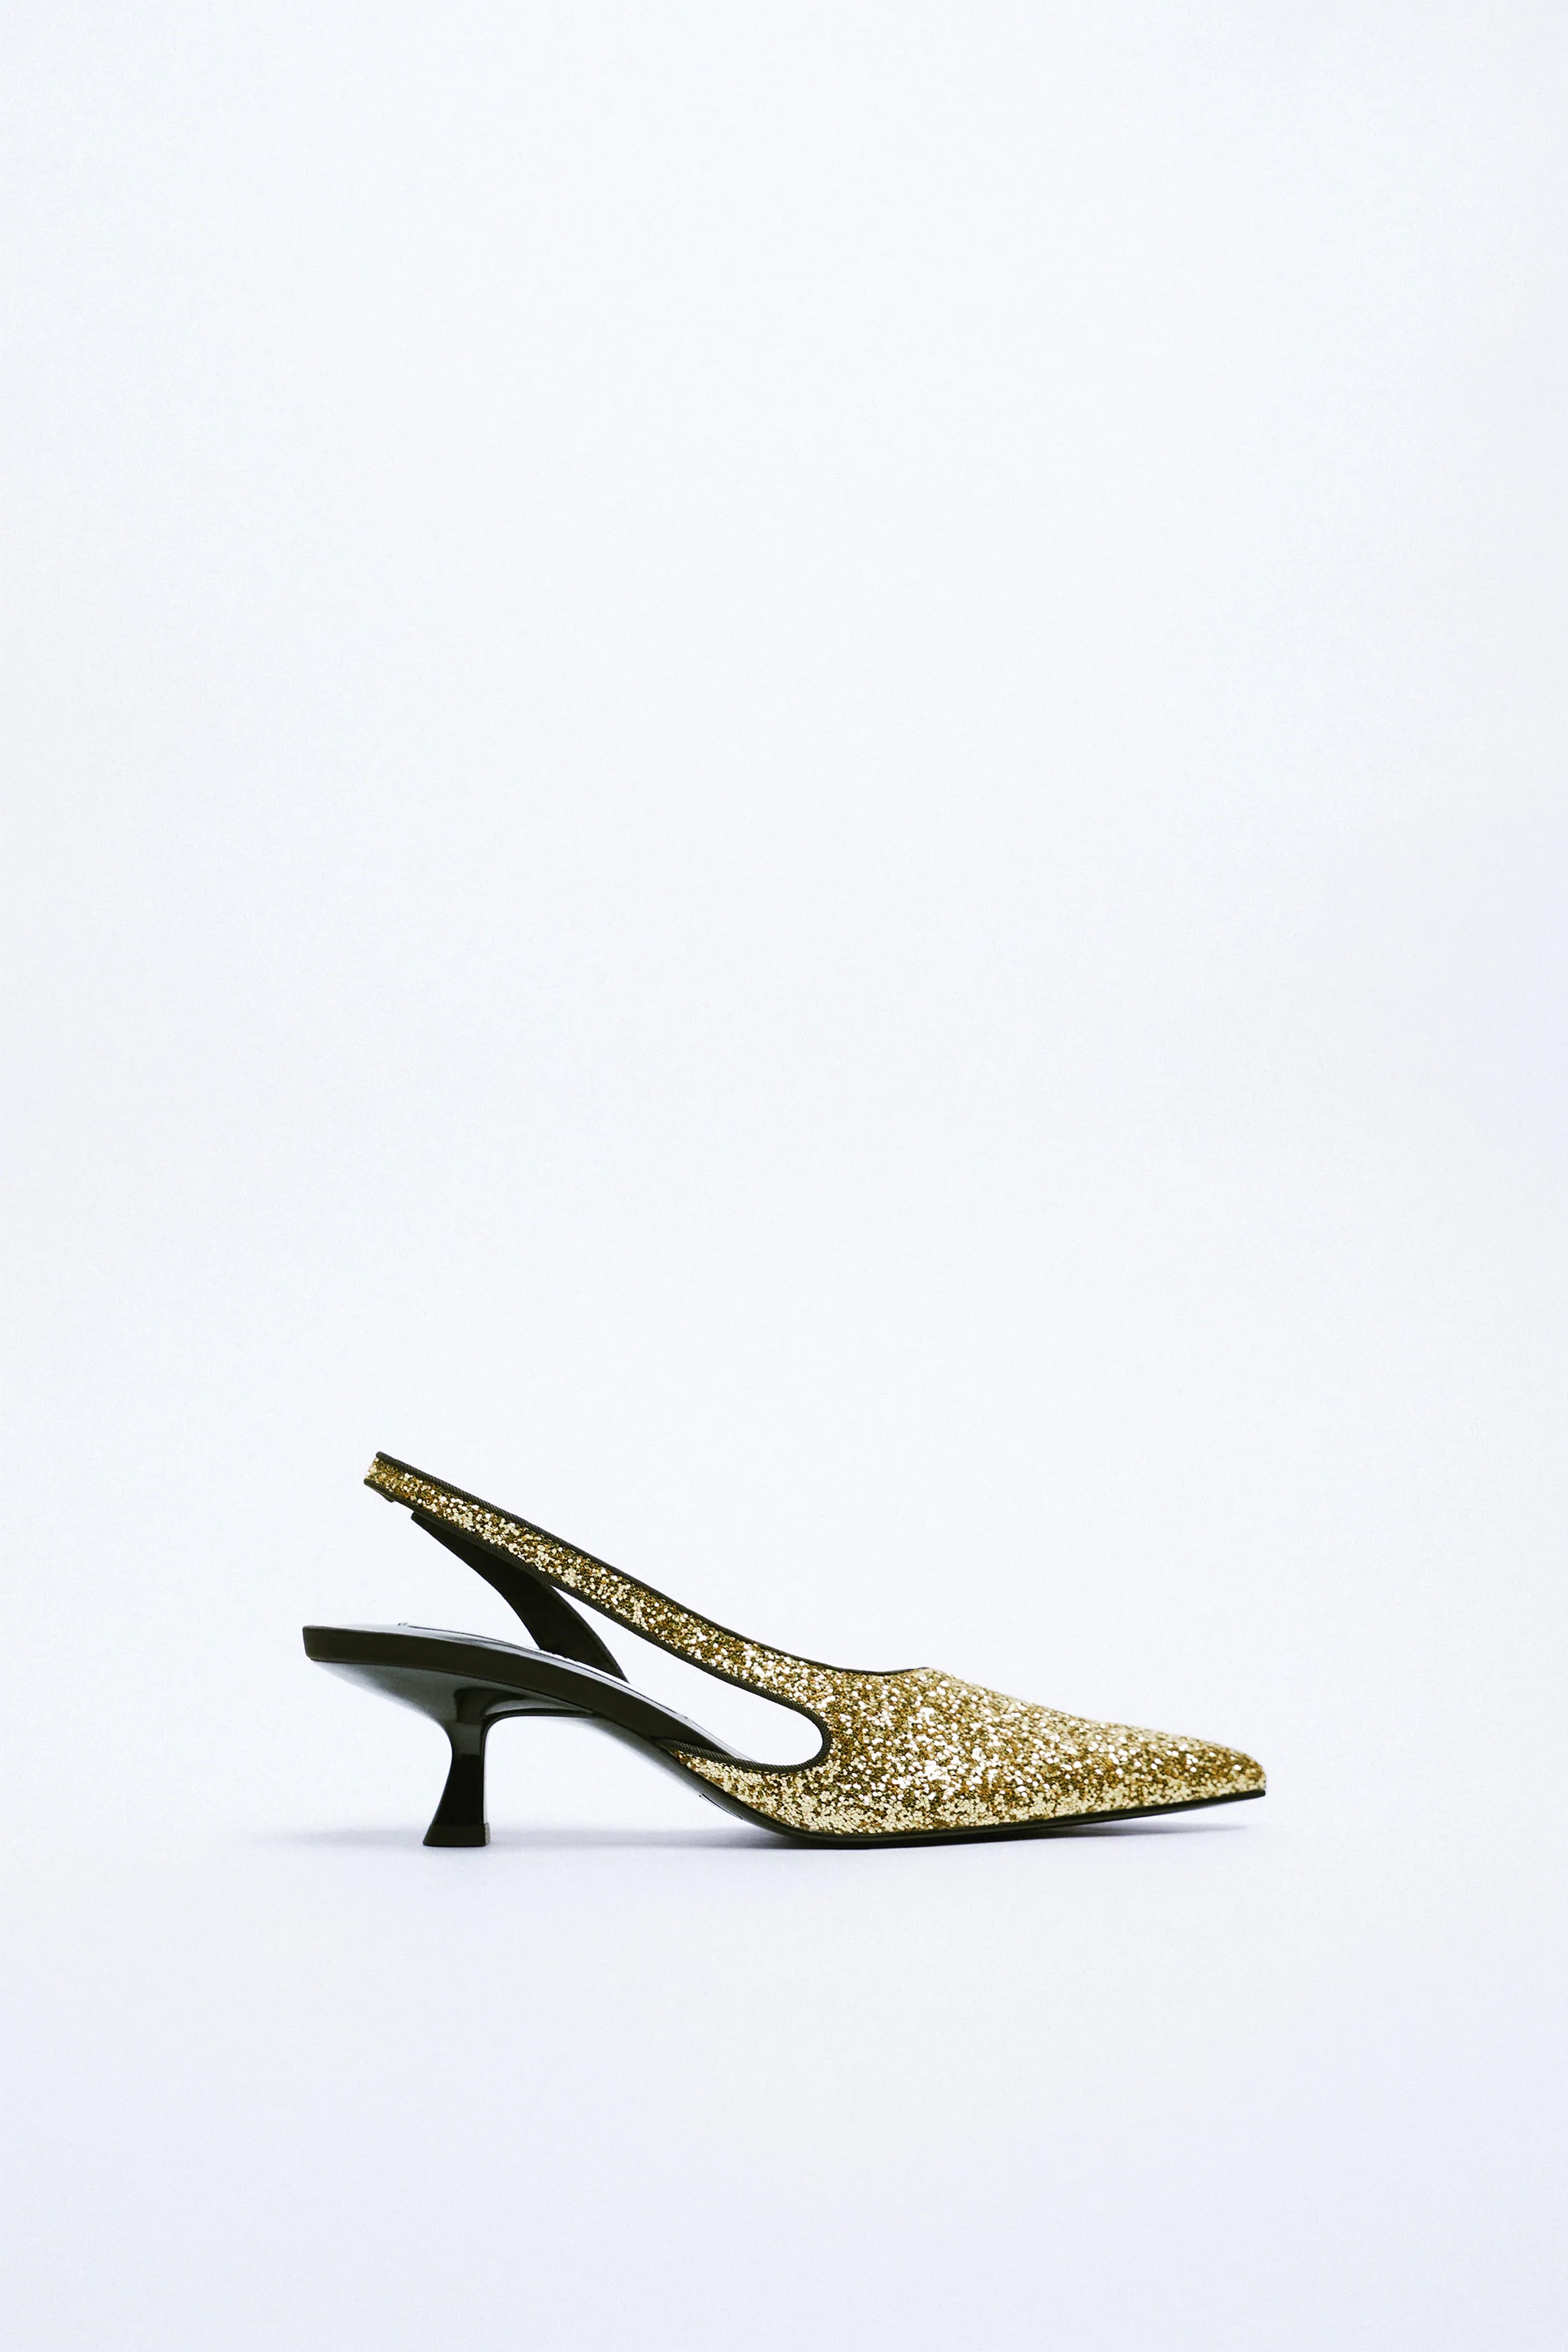 Zara Glitter High Heel Shoes